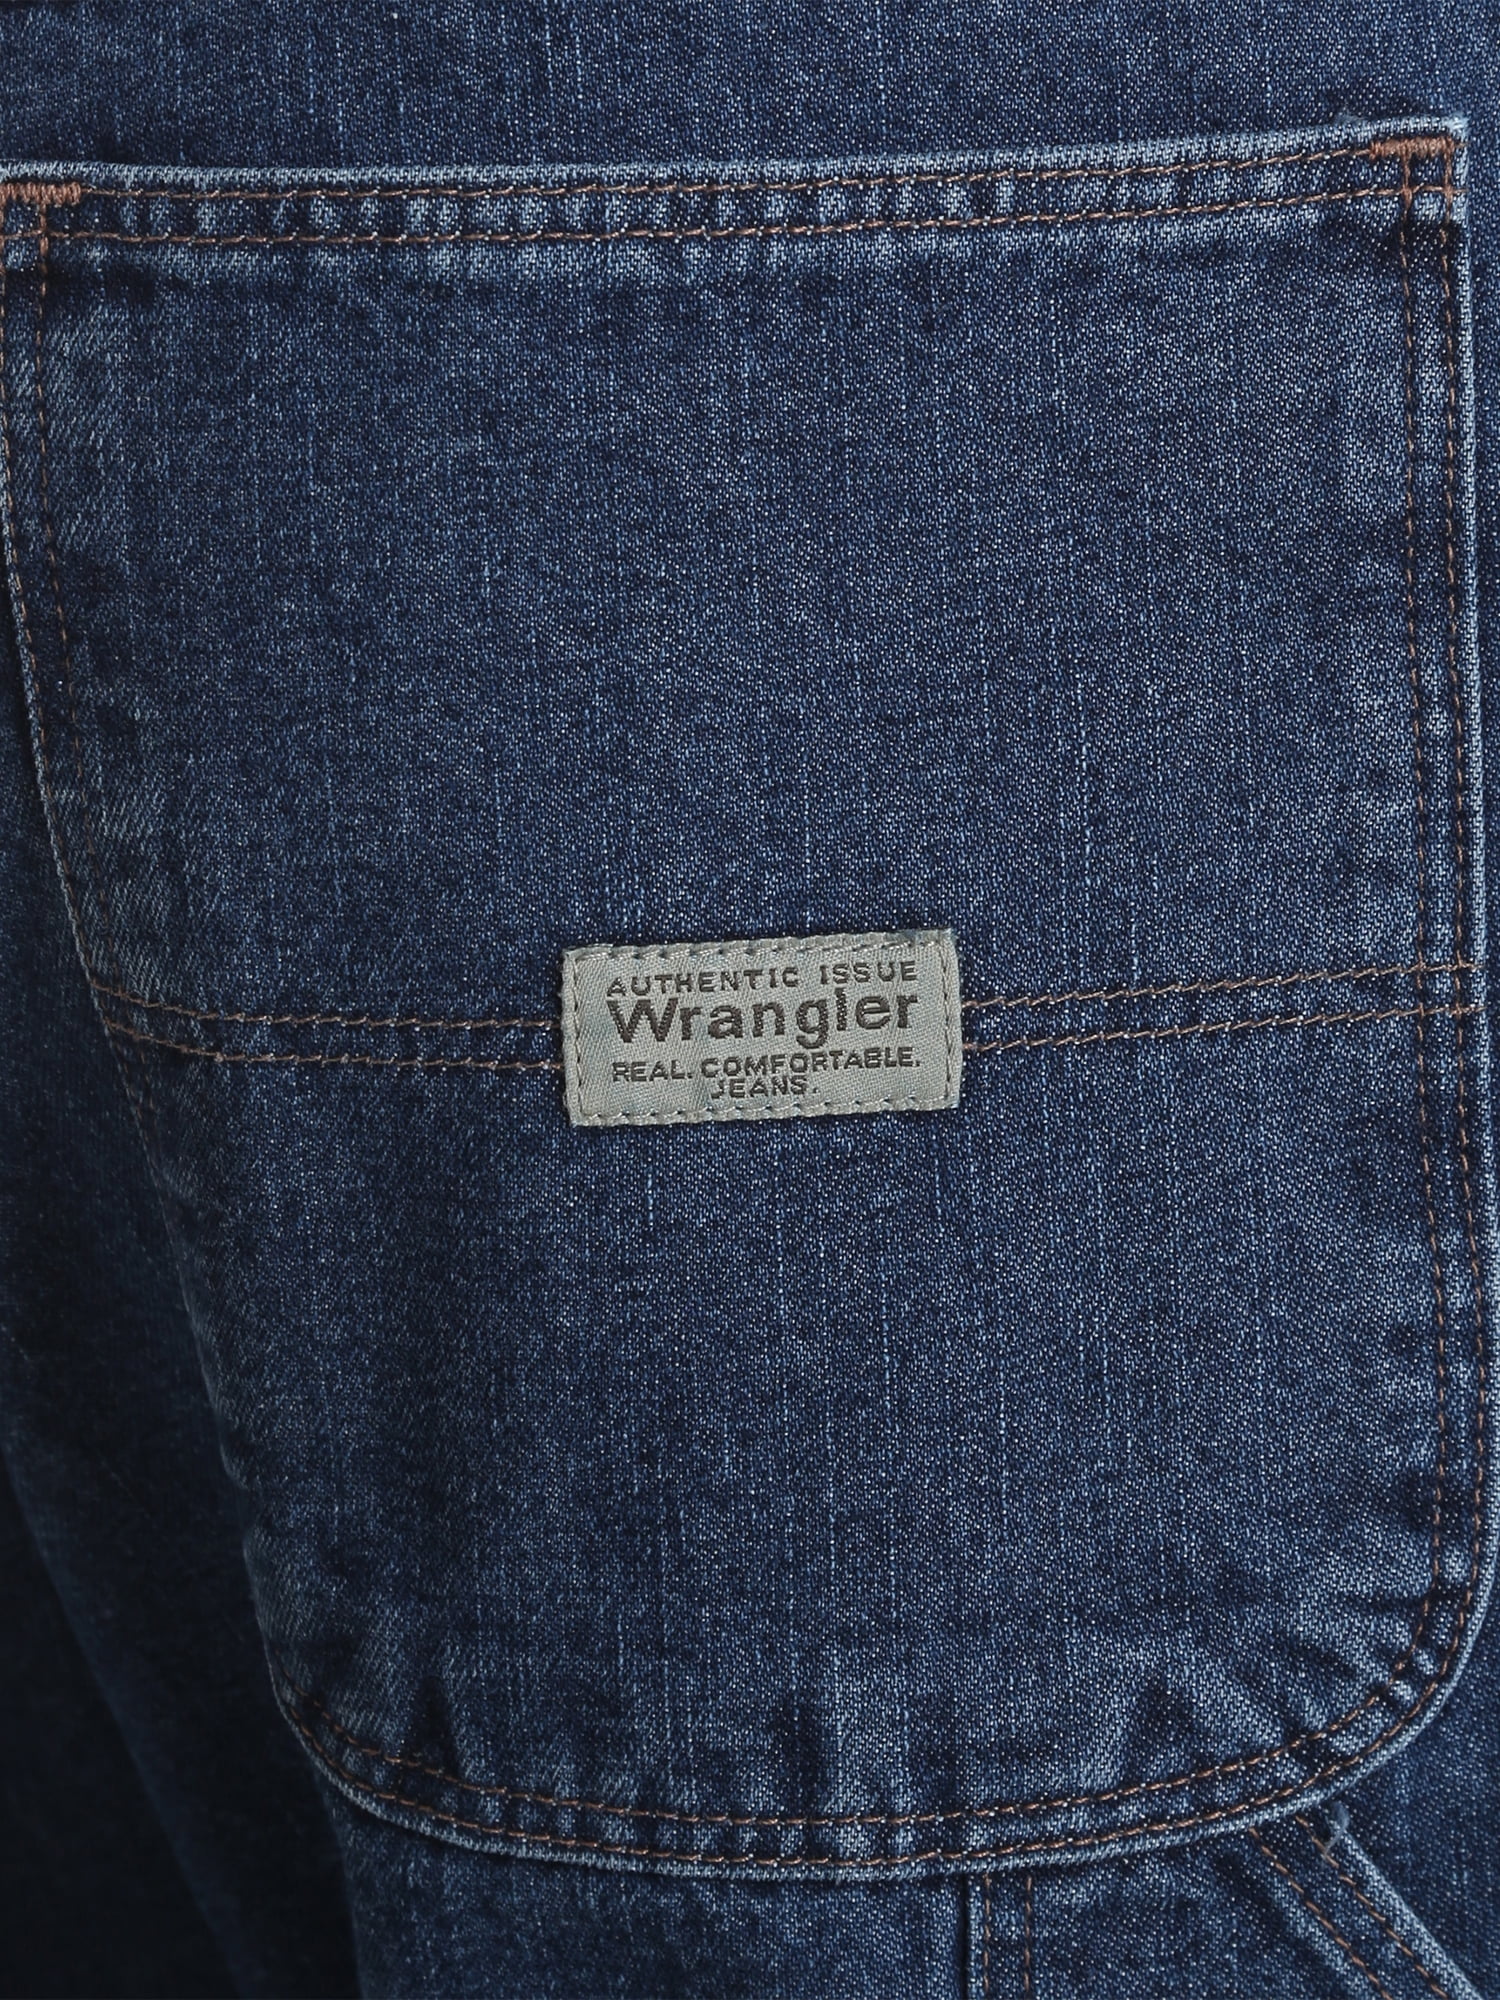 wrangler relaxed fit carpenter jeans walmart